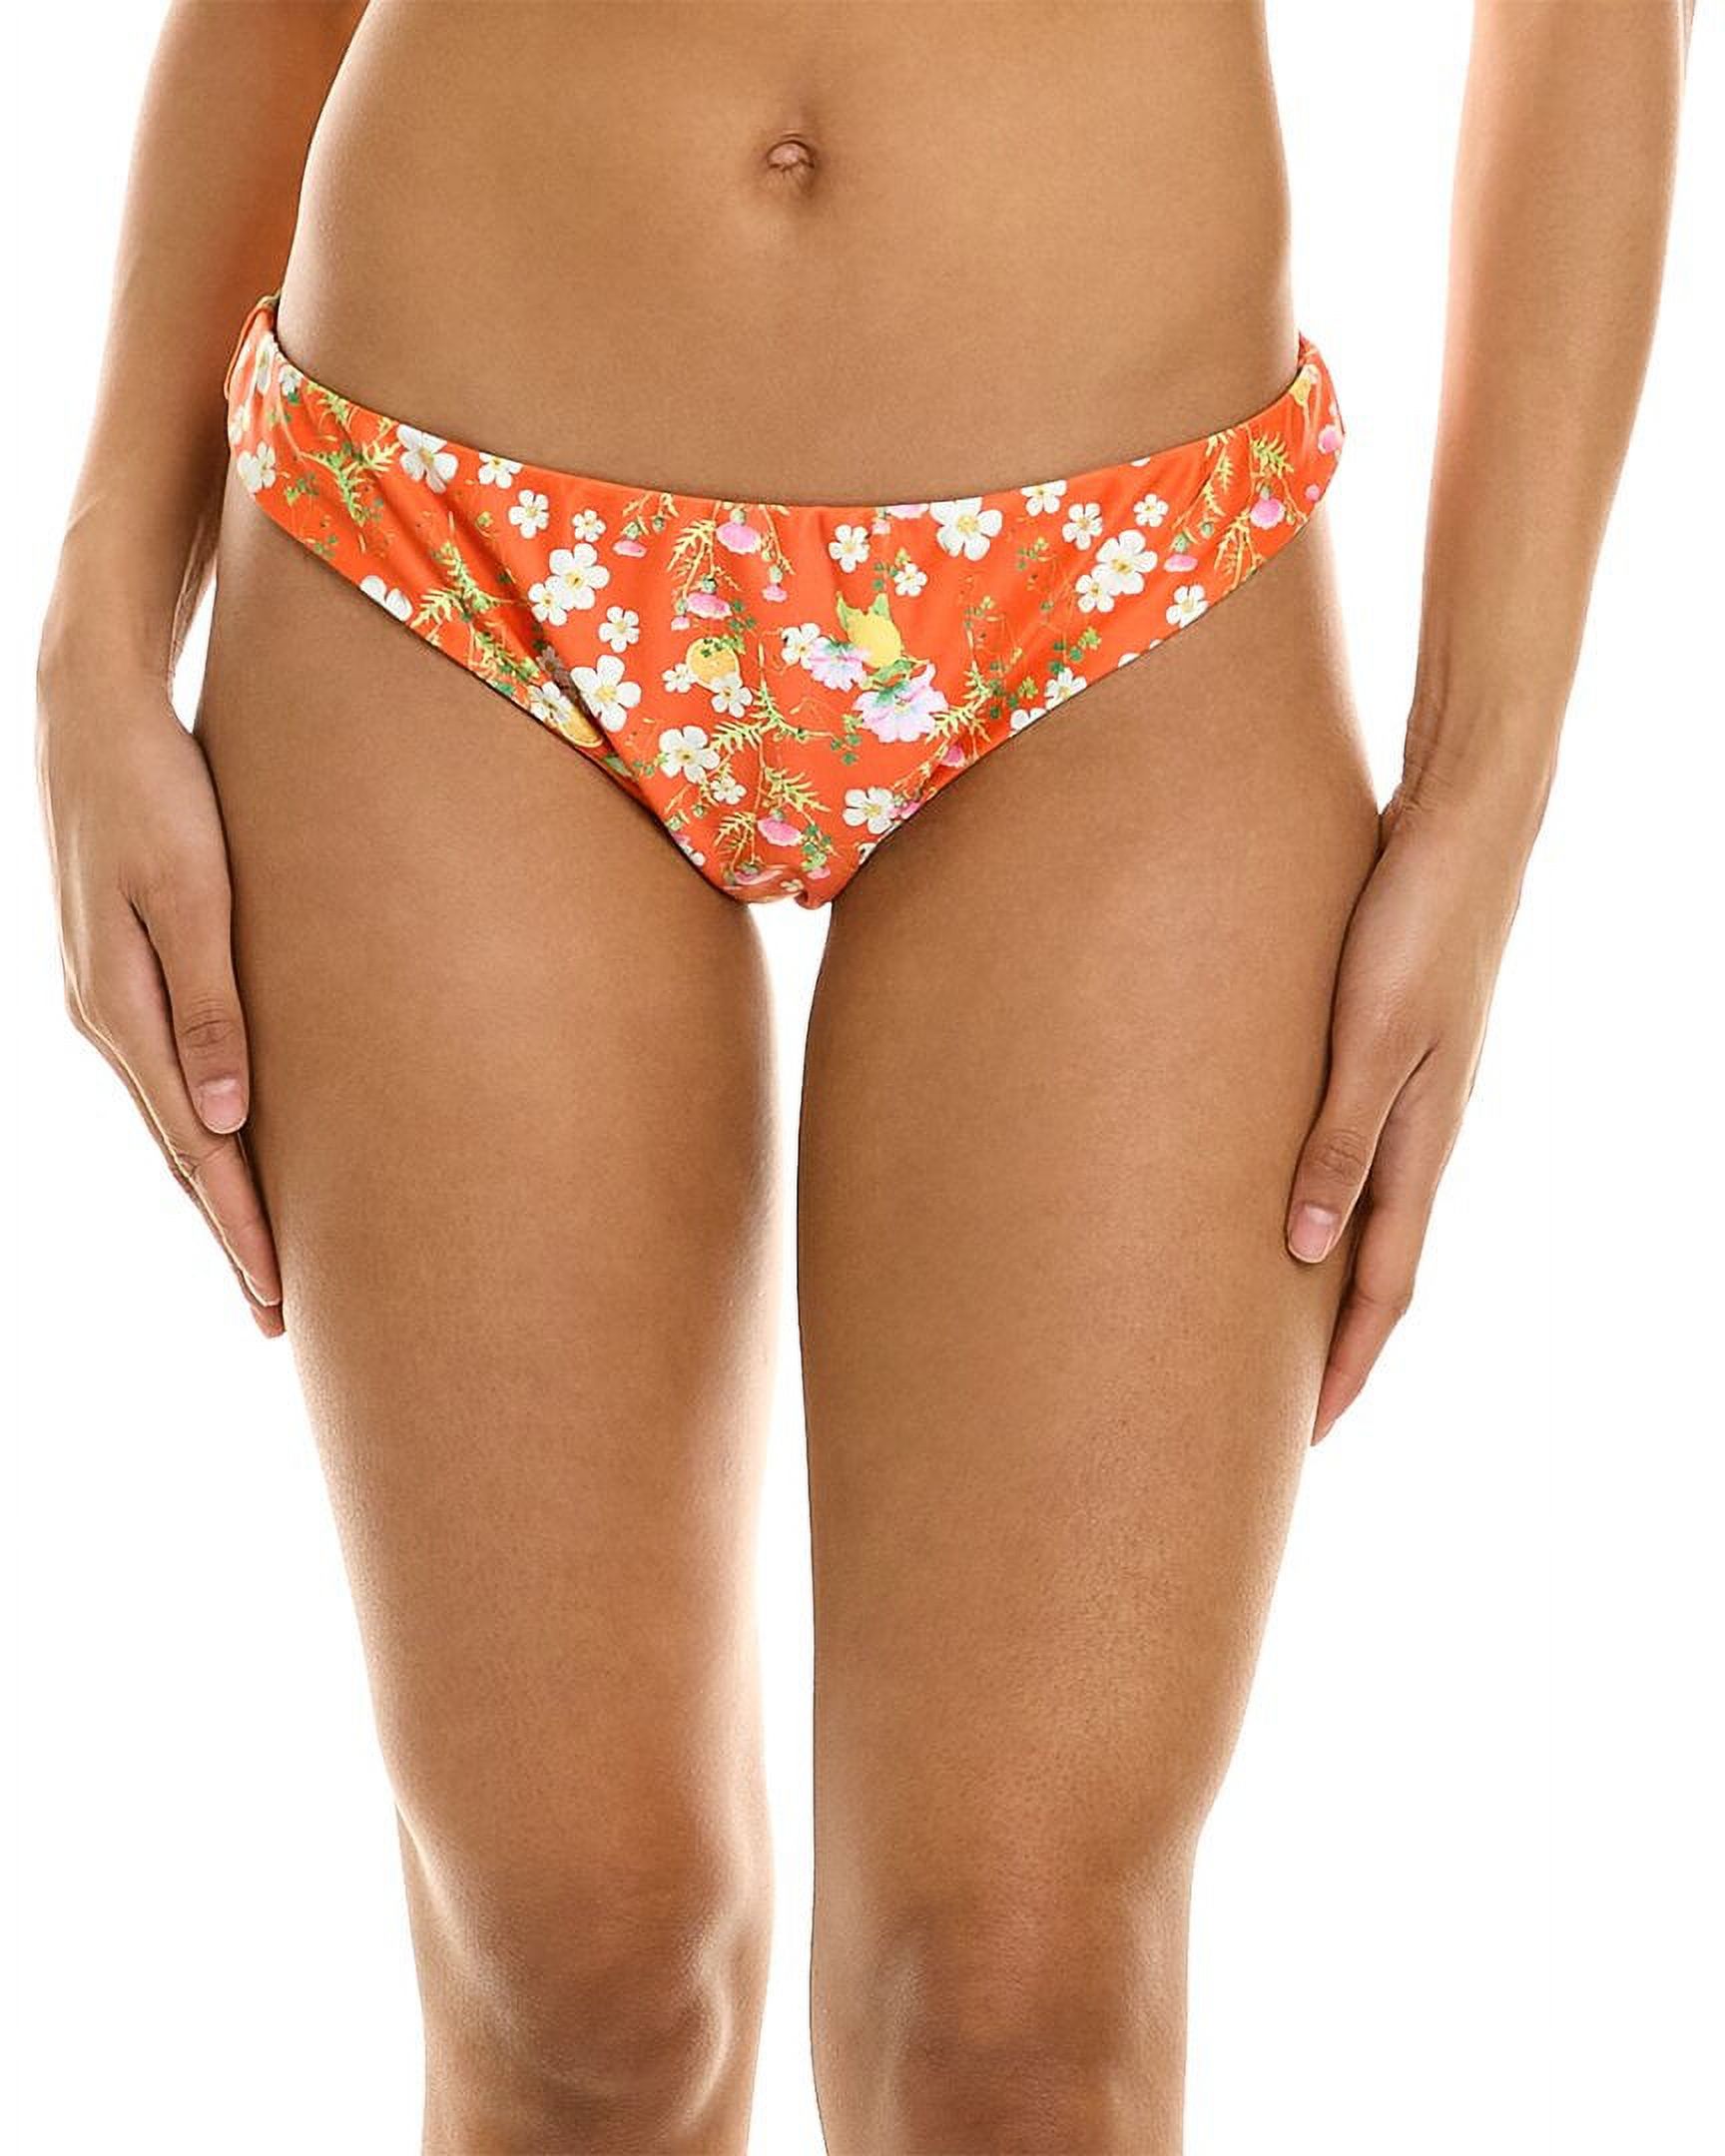 Cynthia Rowley womens  Printed Bikini Bottom, L, Orange - image 1 of 3